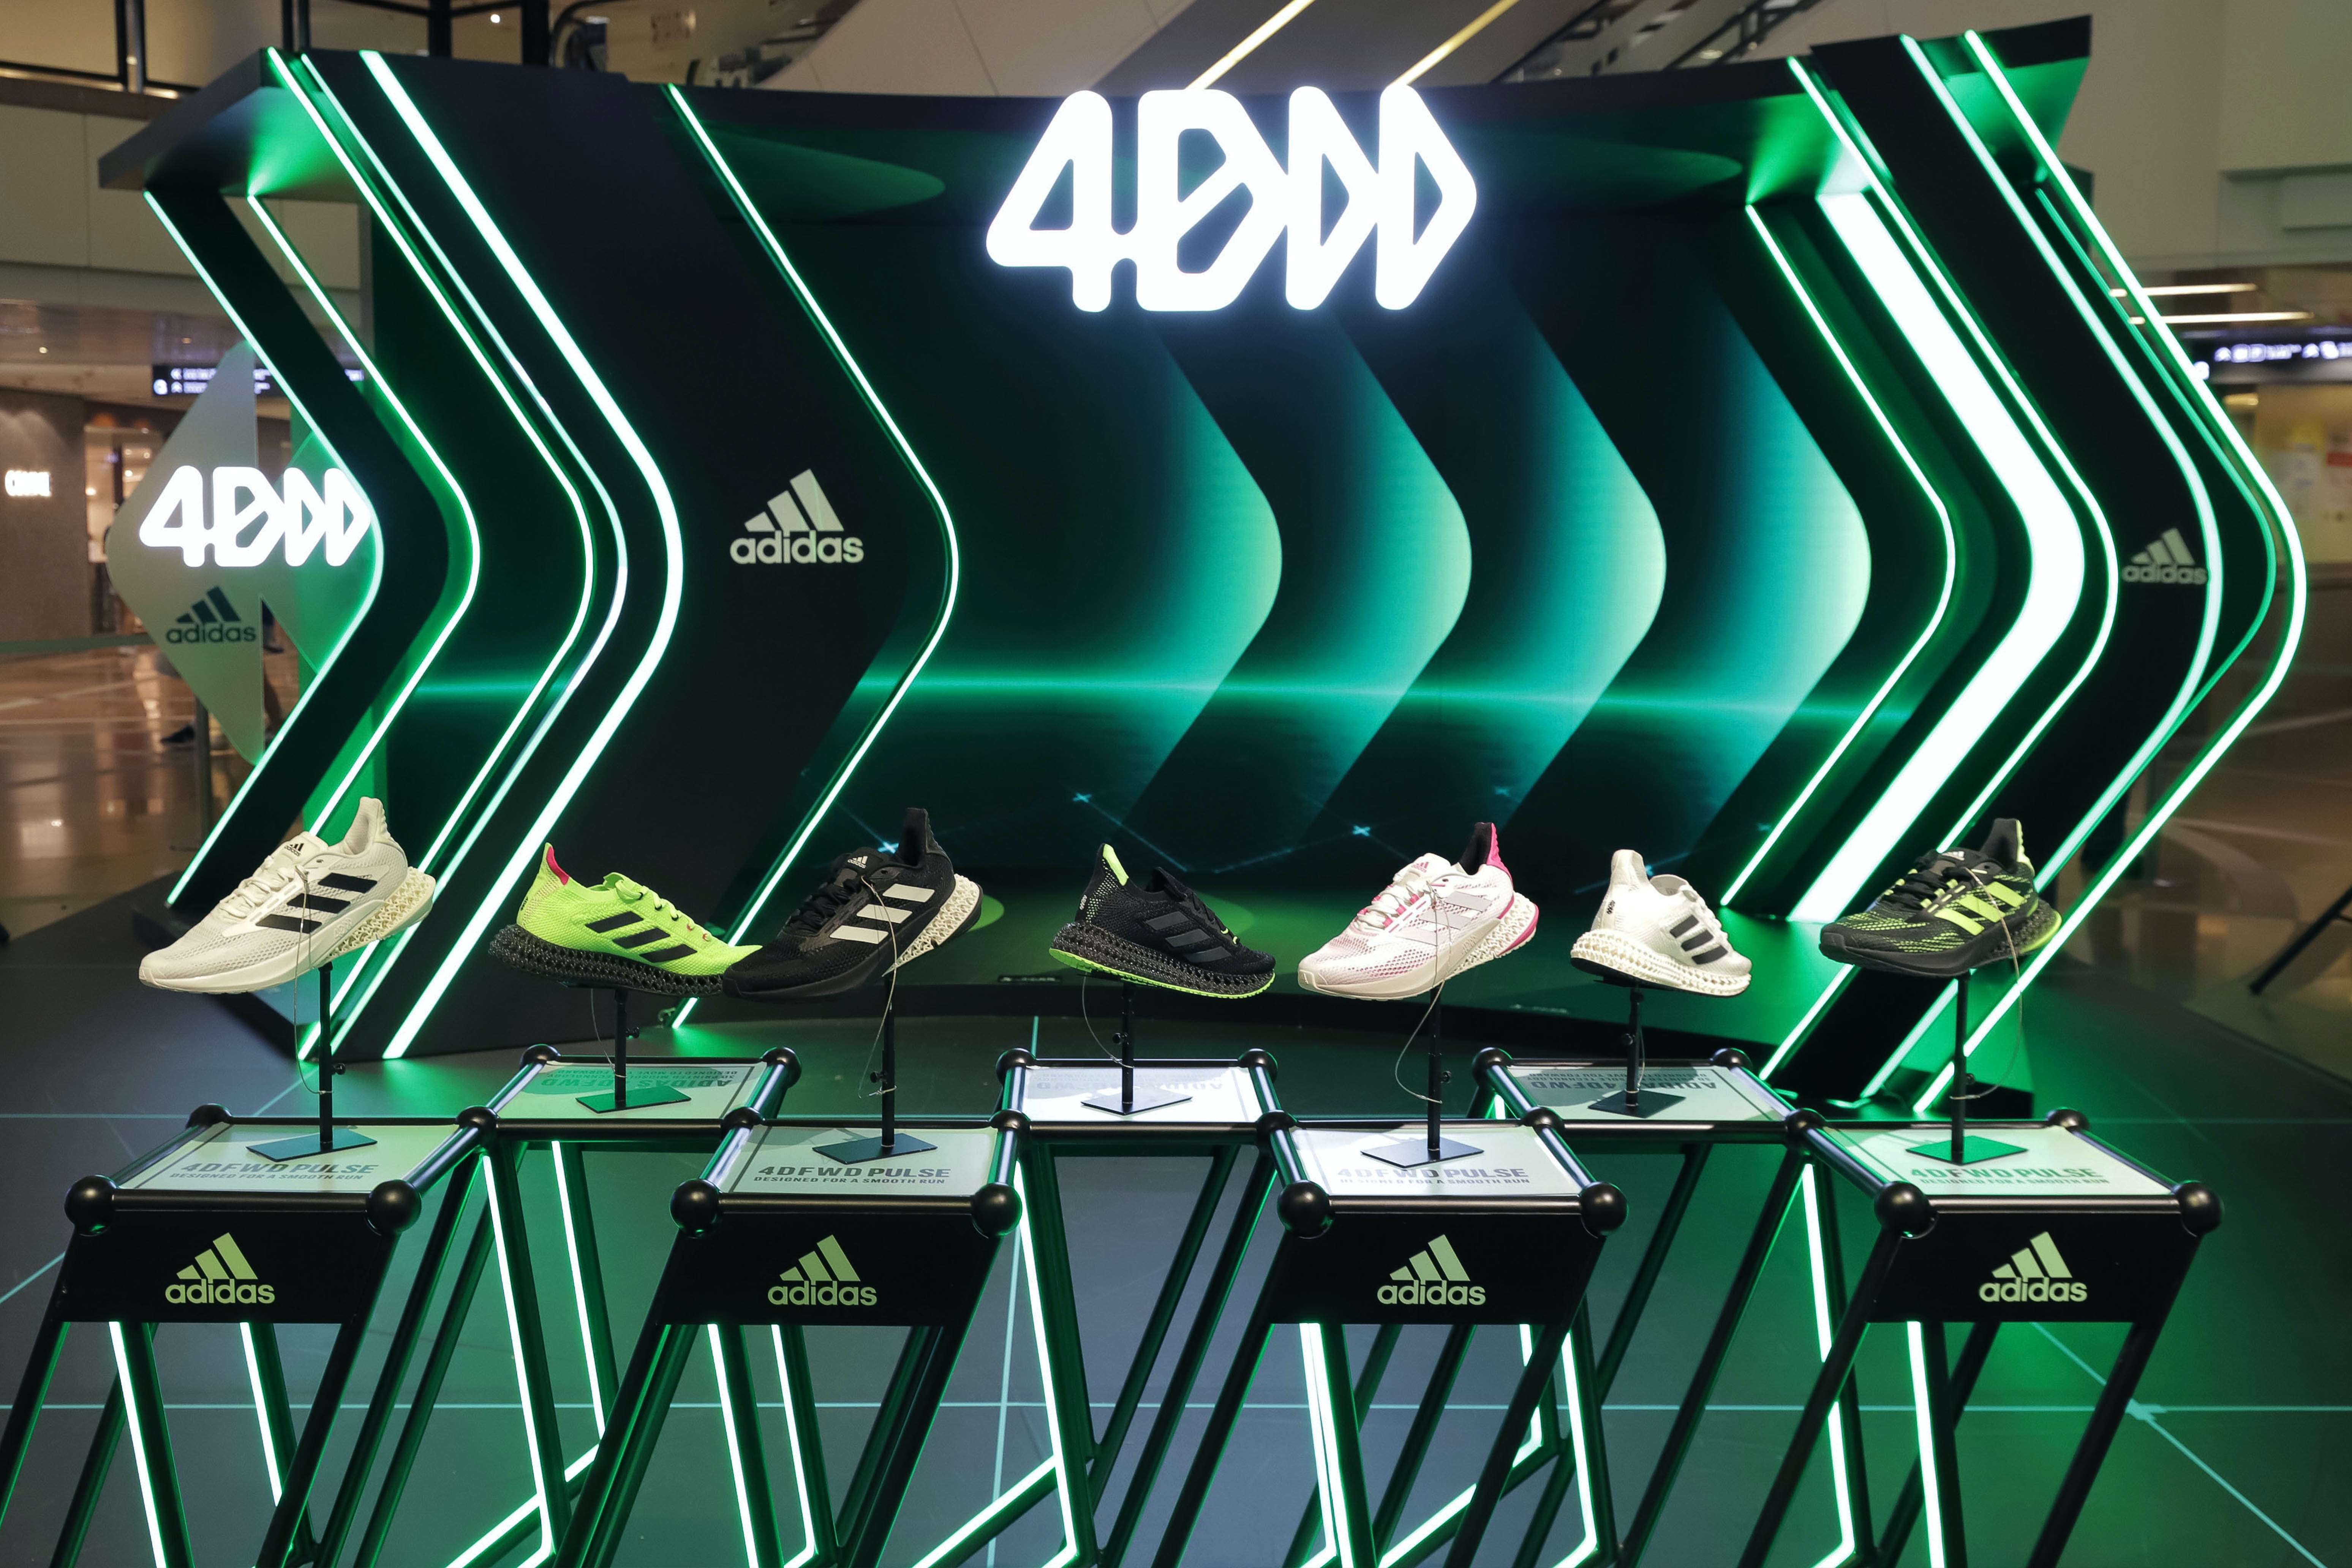 Mirror著用 Adidas最強4dfwd跑鞋焦點幾何中底設計打造機能時尚 香港01 一物